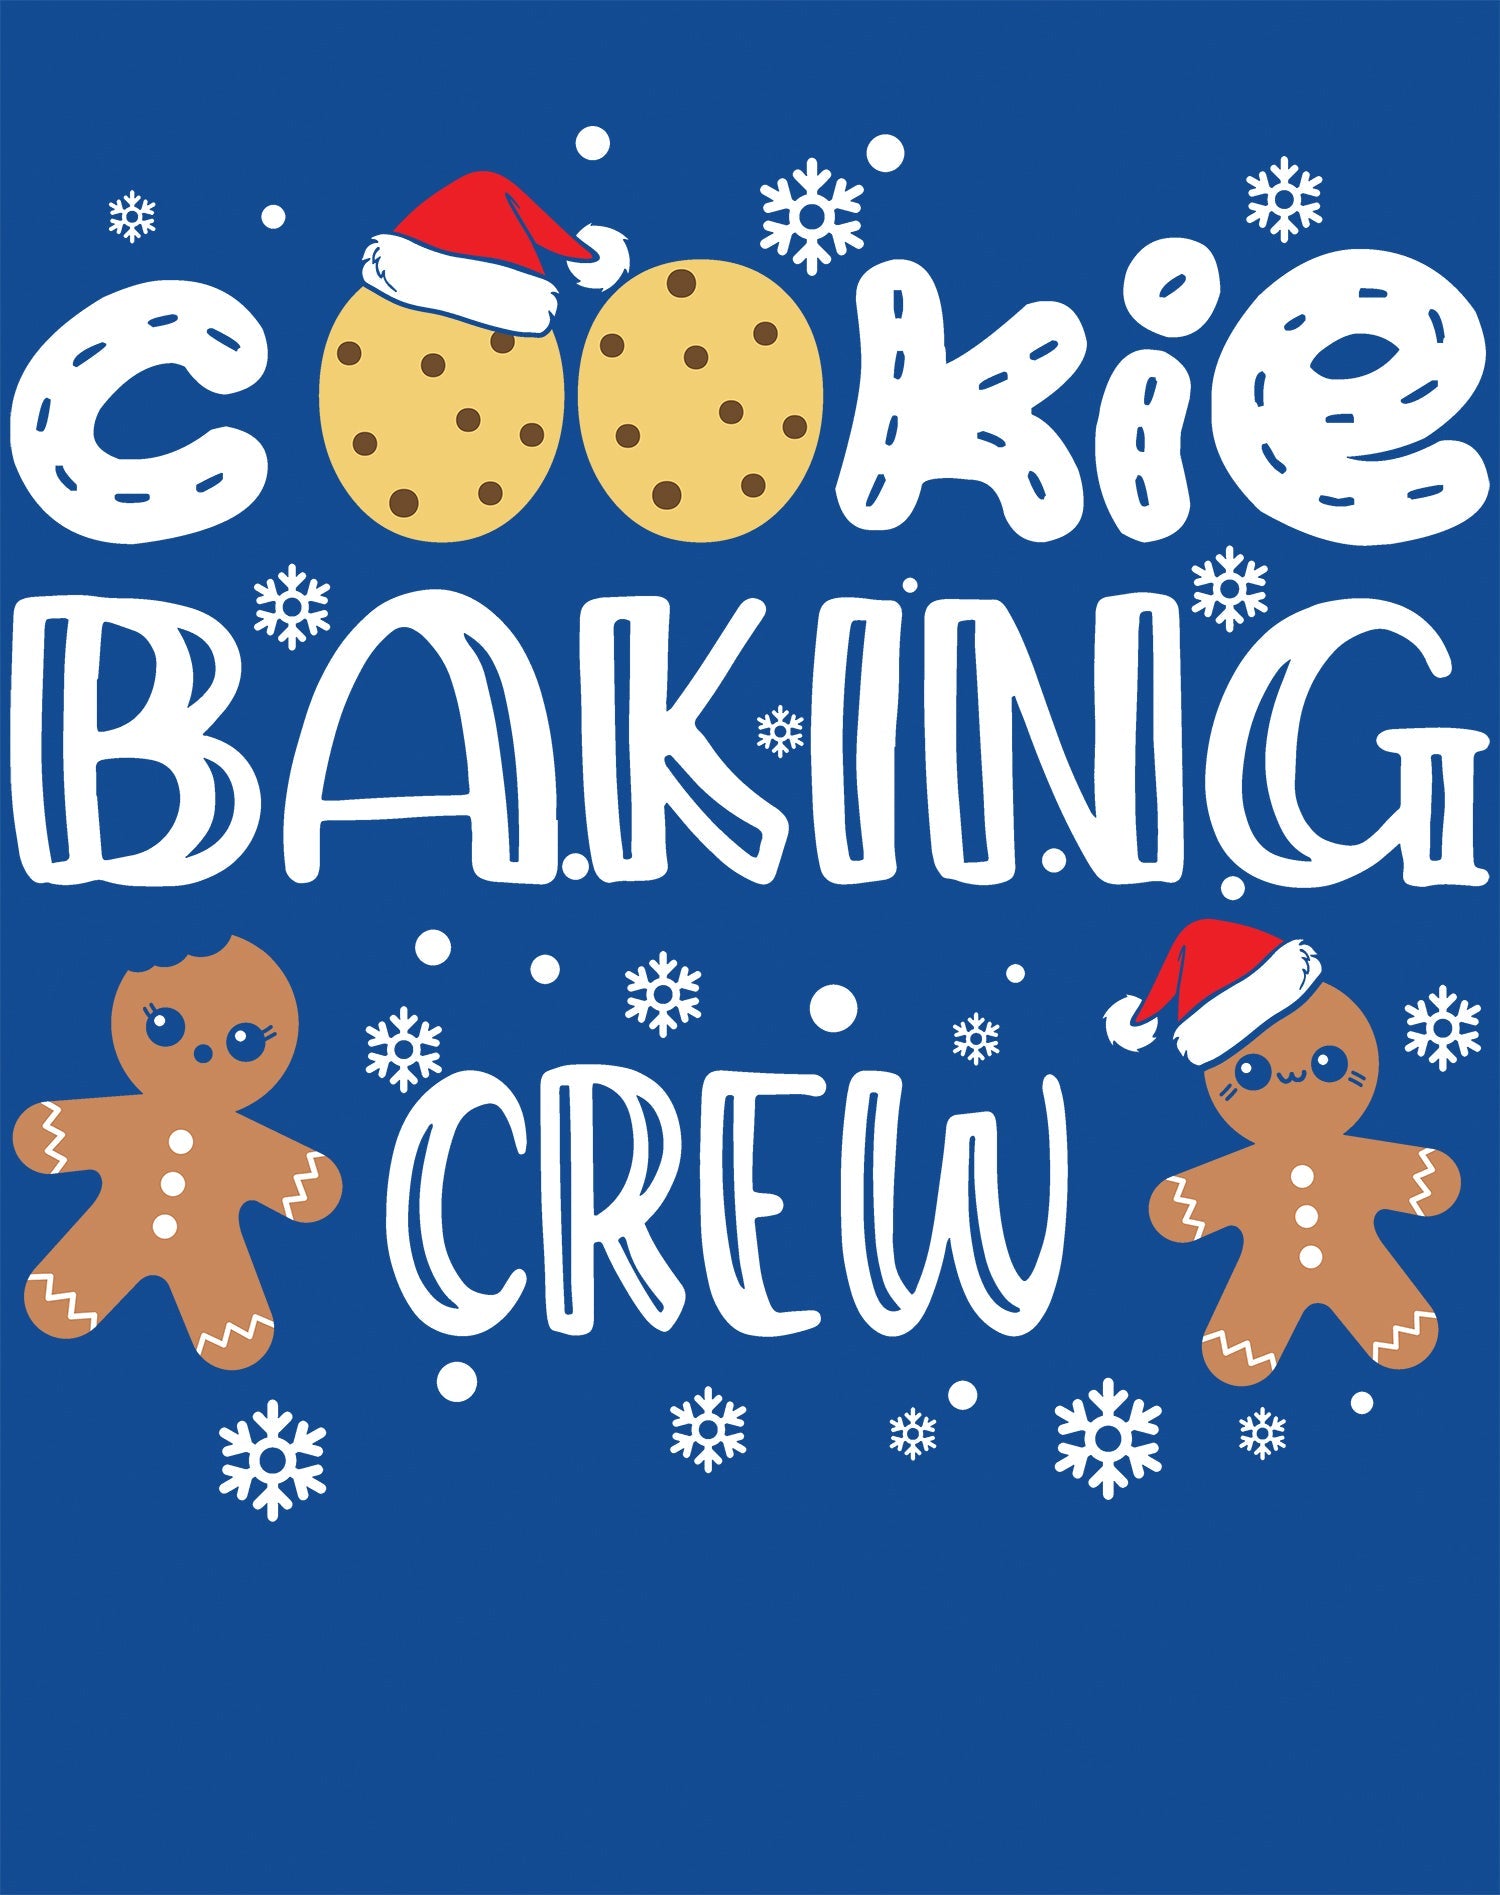 Christmas Cookie Baking Crew Gingerbread Men Matching Family Women's T-Shirt